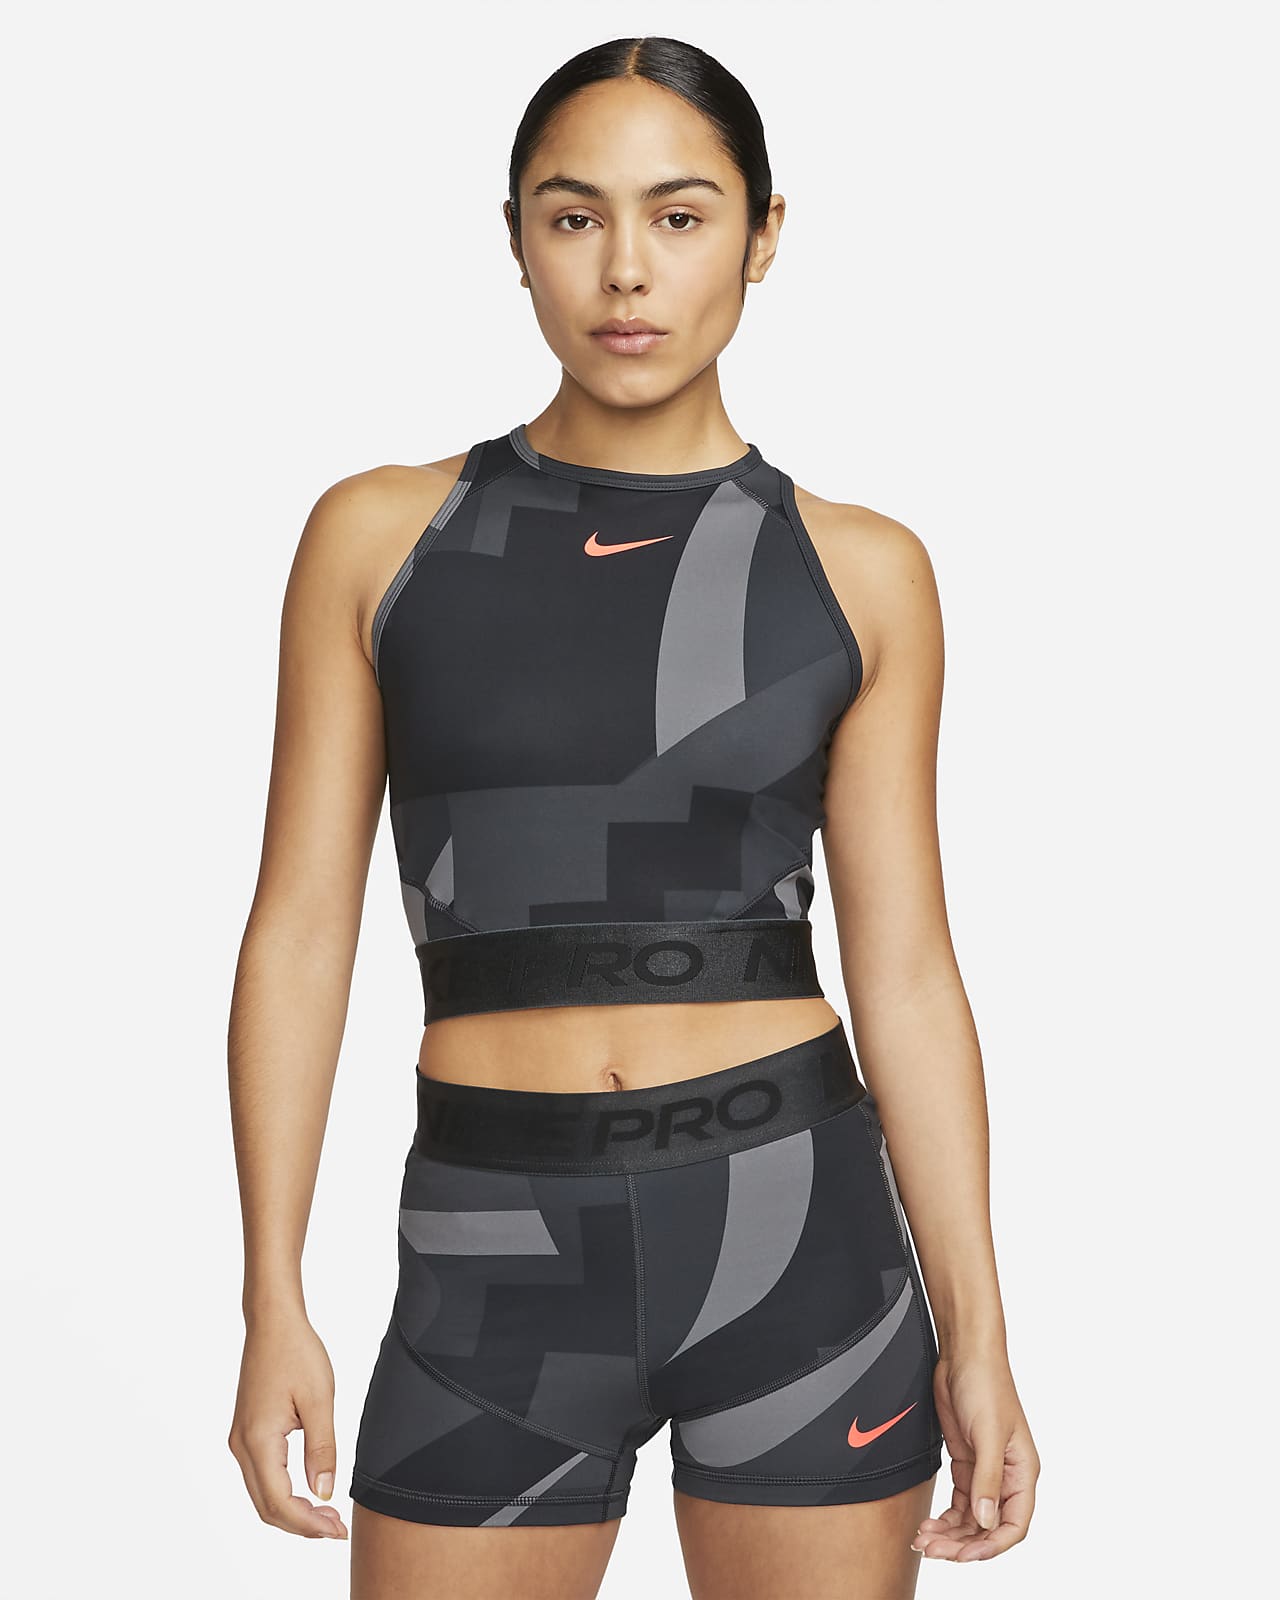 Nike Pro Women\'s Cropped Training Tank. Dri-FIT